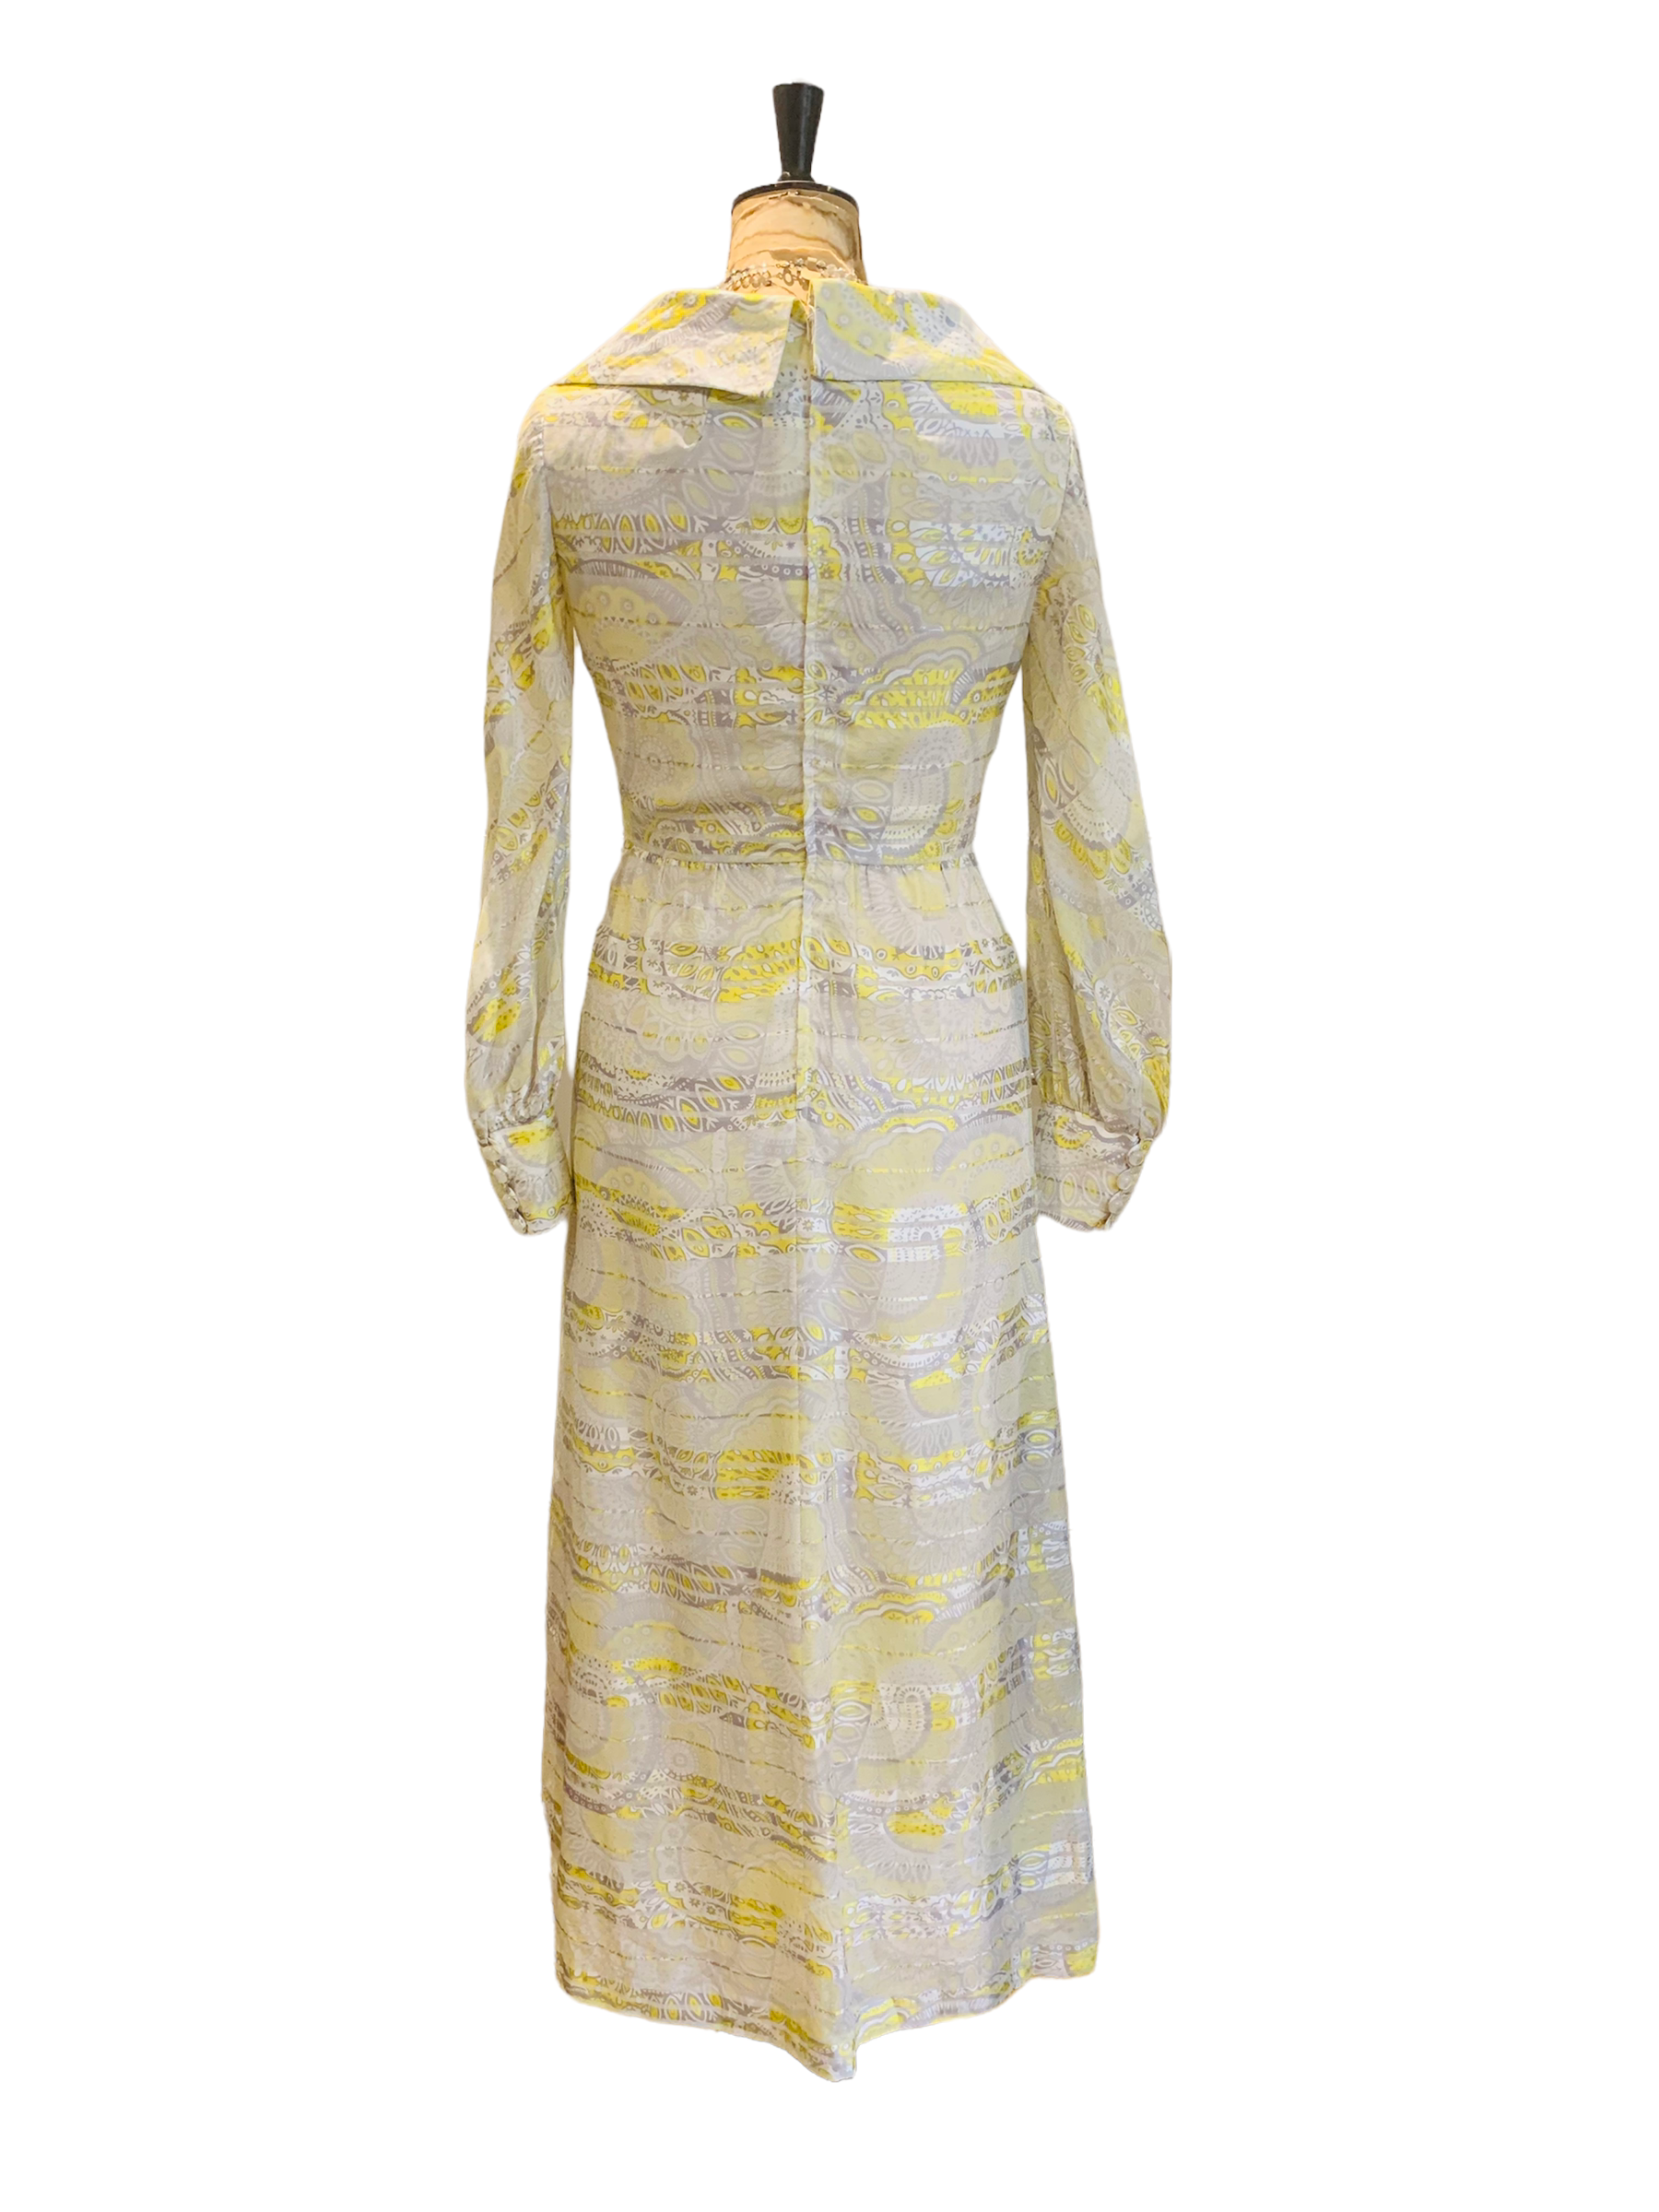 50s Vintage Yellow and White Maxi Dress Size UK 10 - 12